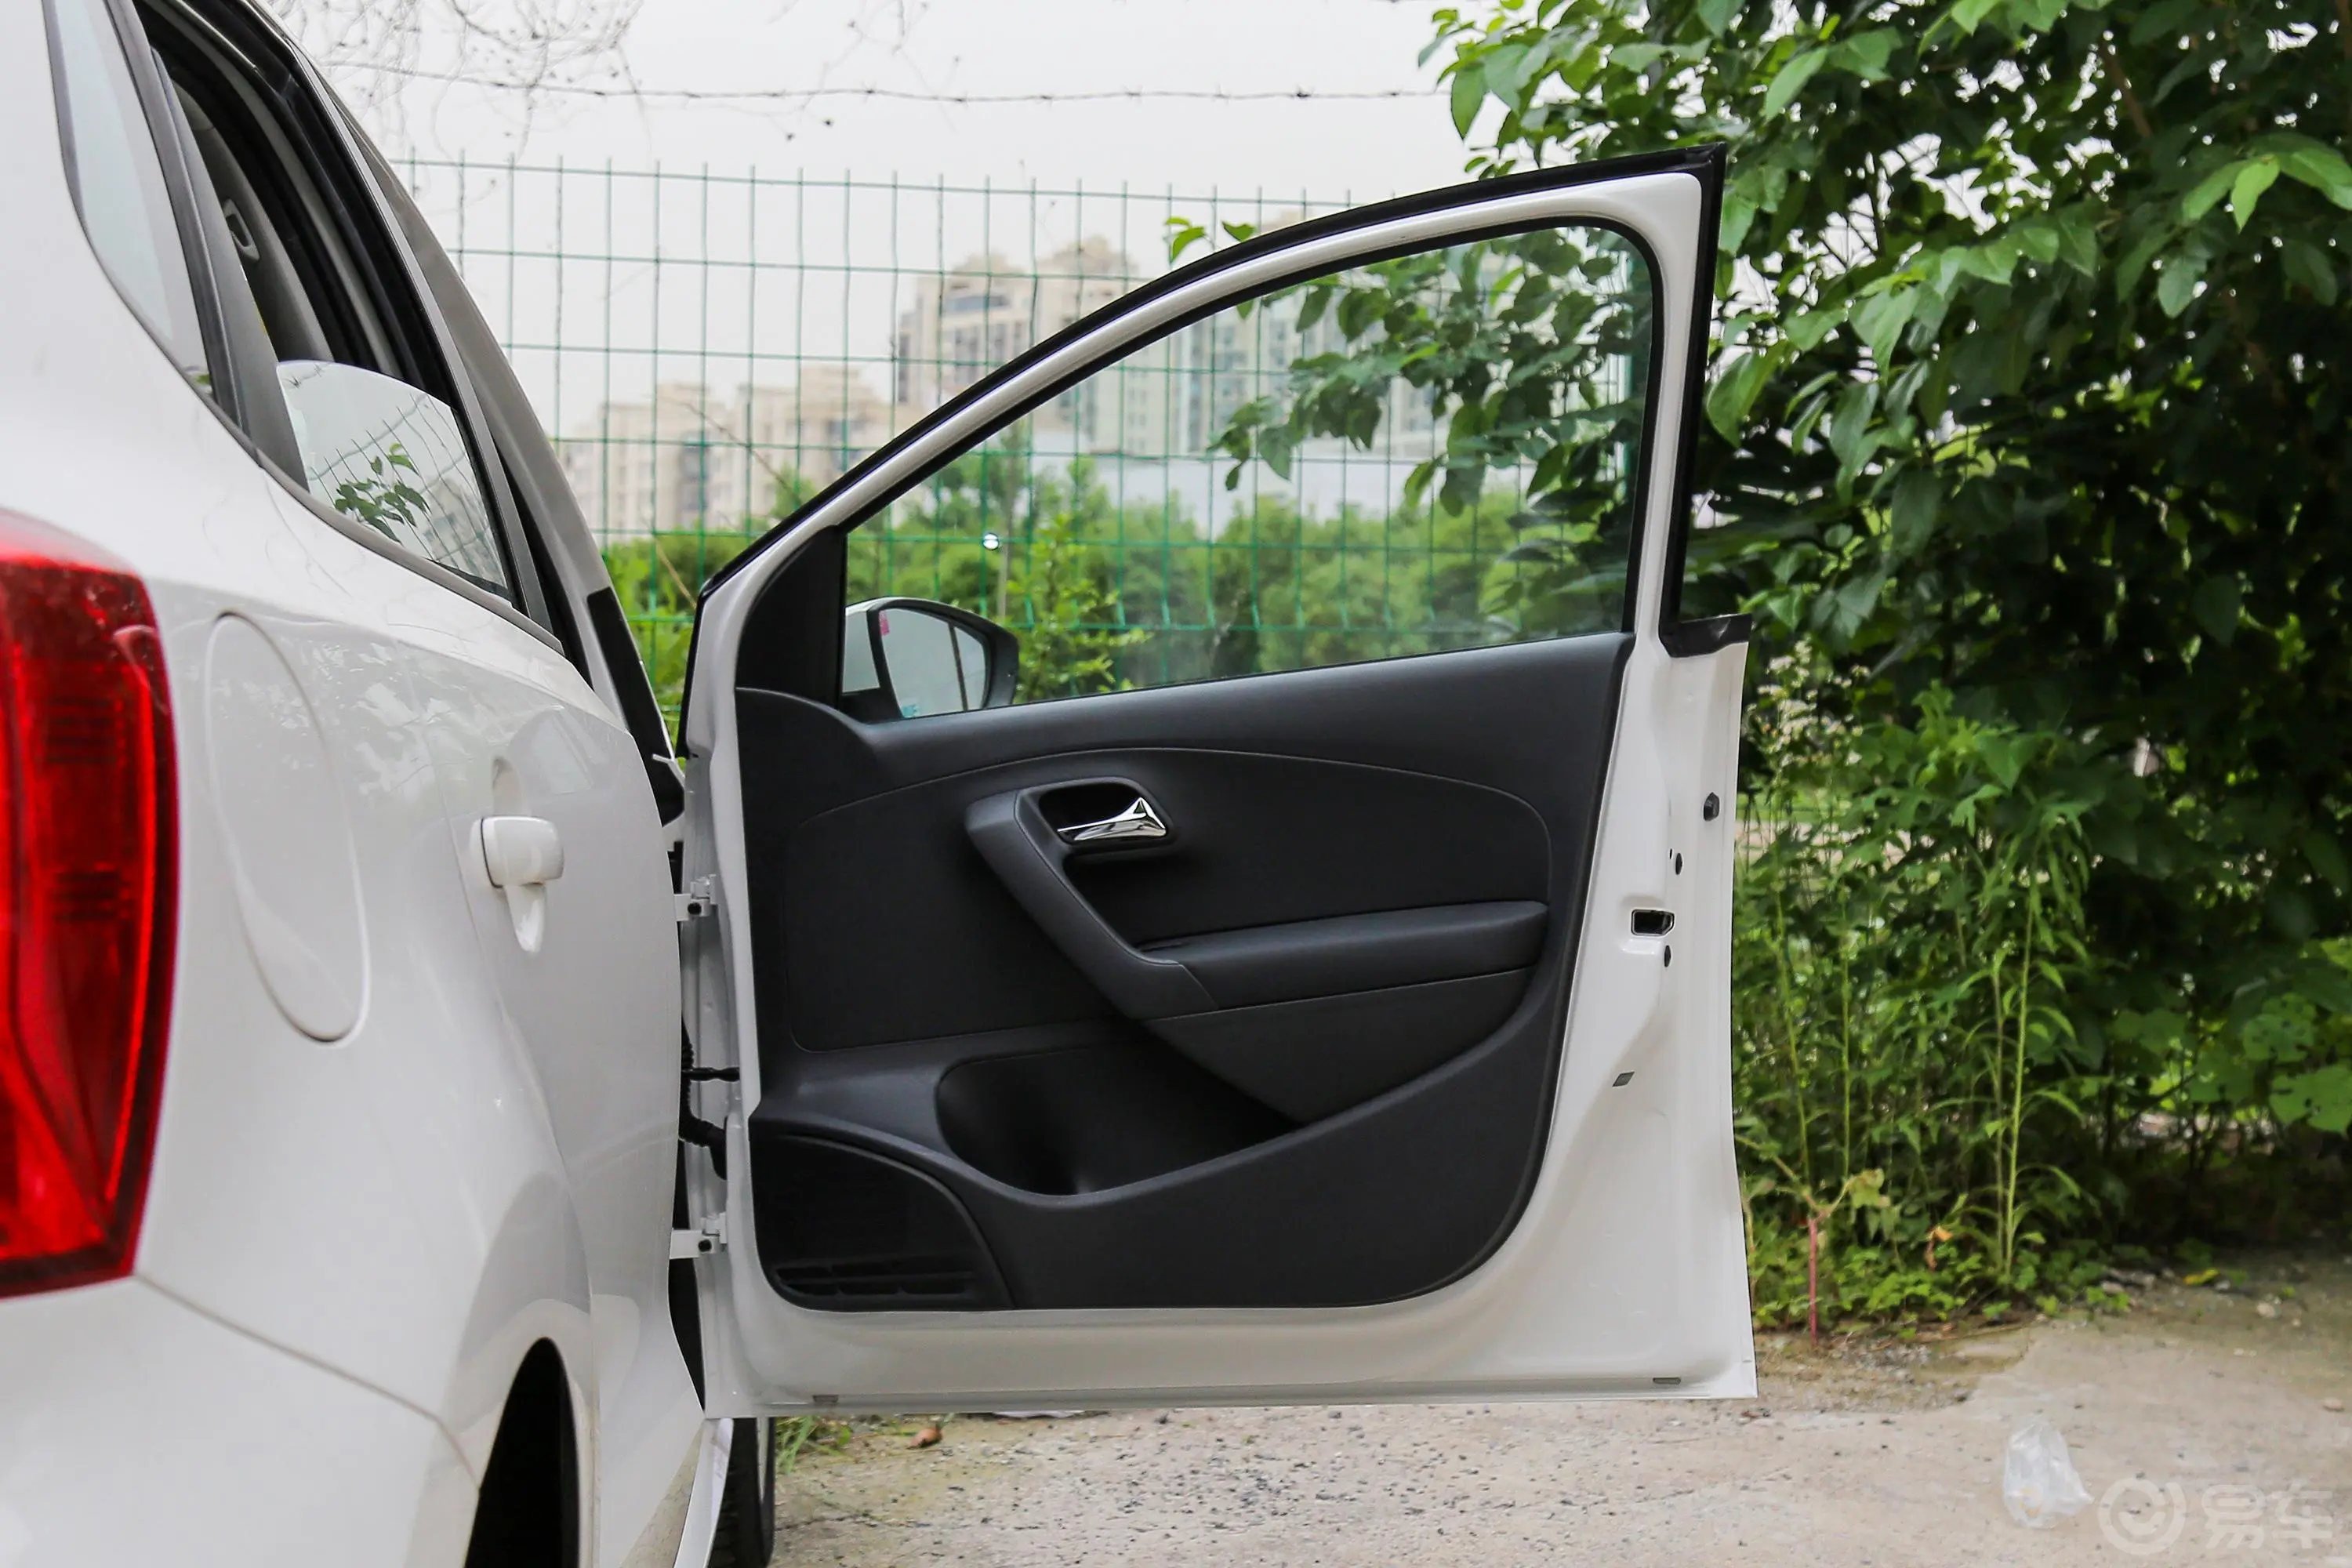 Polo1.5L 自动 安驾版副驾驶员车门